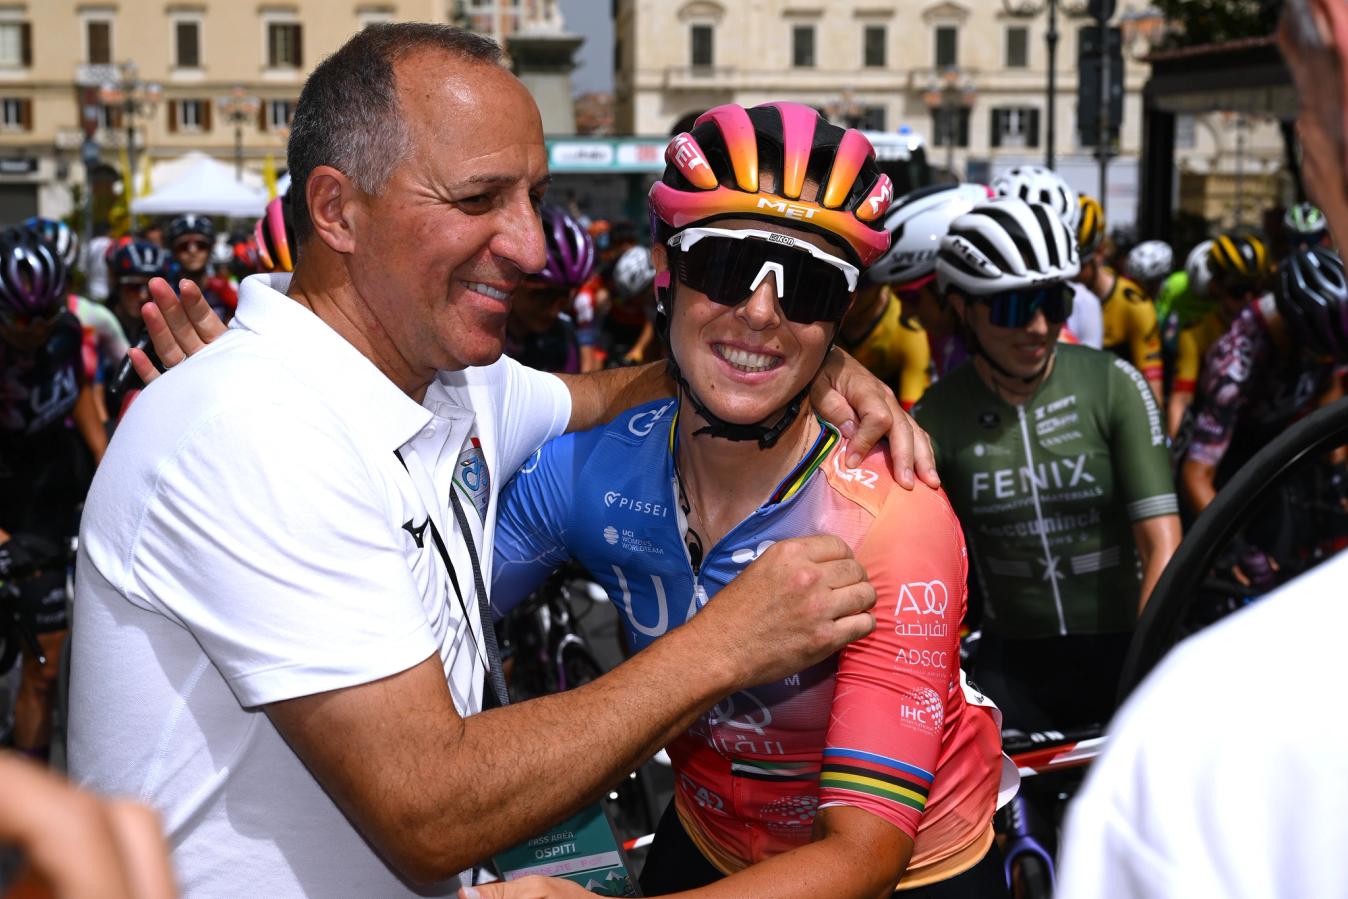 Marta Bastianelli celebrates the end of her career at the Giro d'Italia Donne alongside Cordiano Dagnoni of the Italian Cycling Federation 